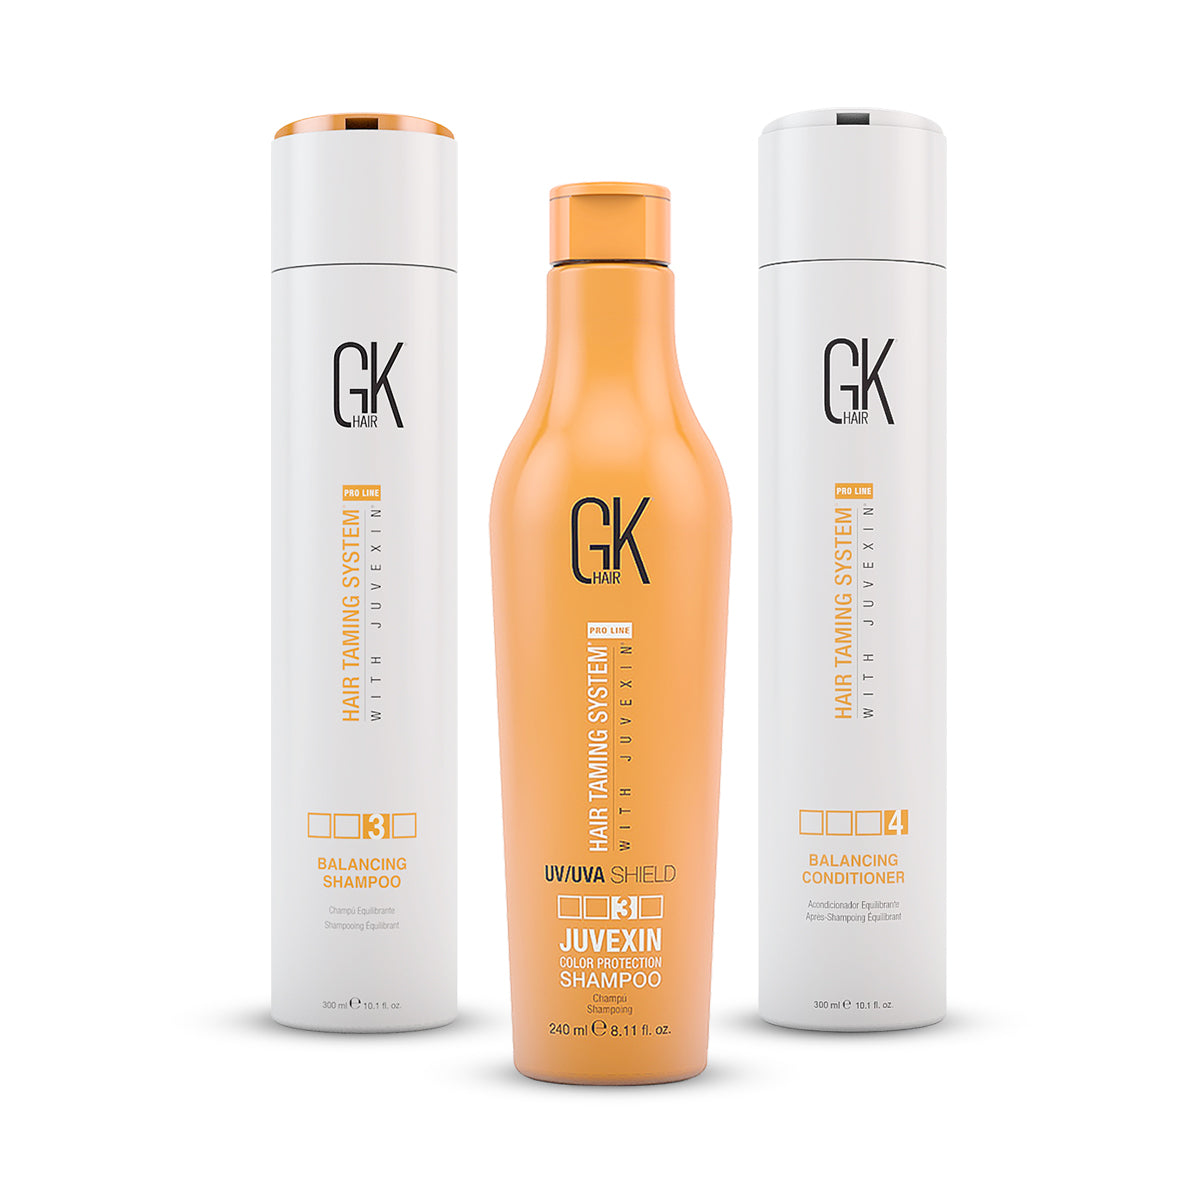 GK Hair Balancing Shampoo and Conditioner 300 Ml with Color Shield Shampoo 240 MI